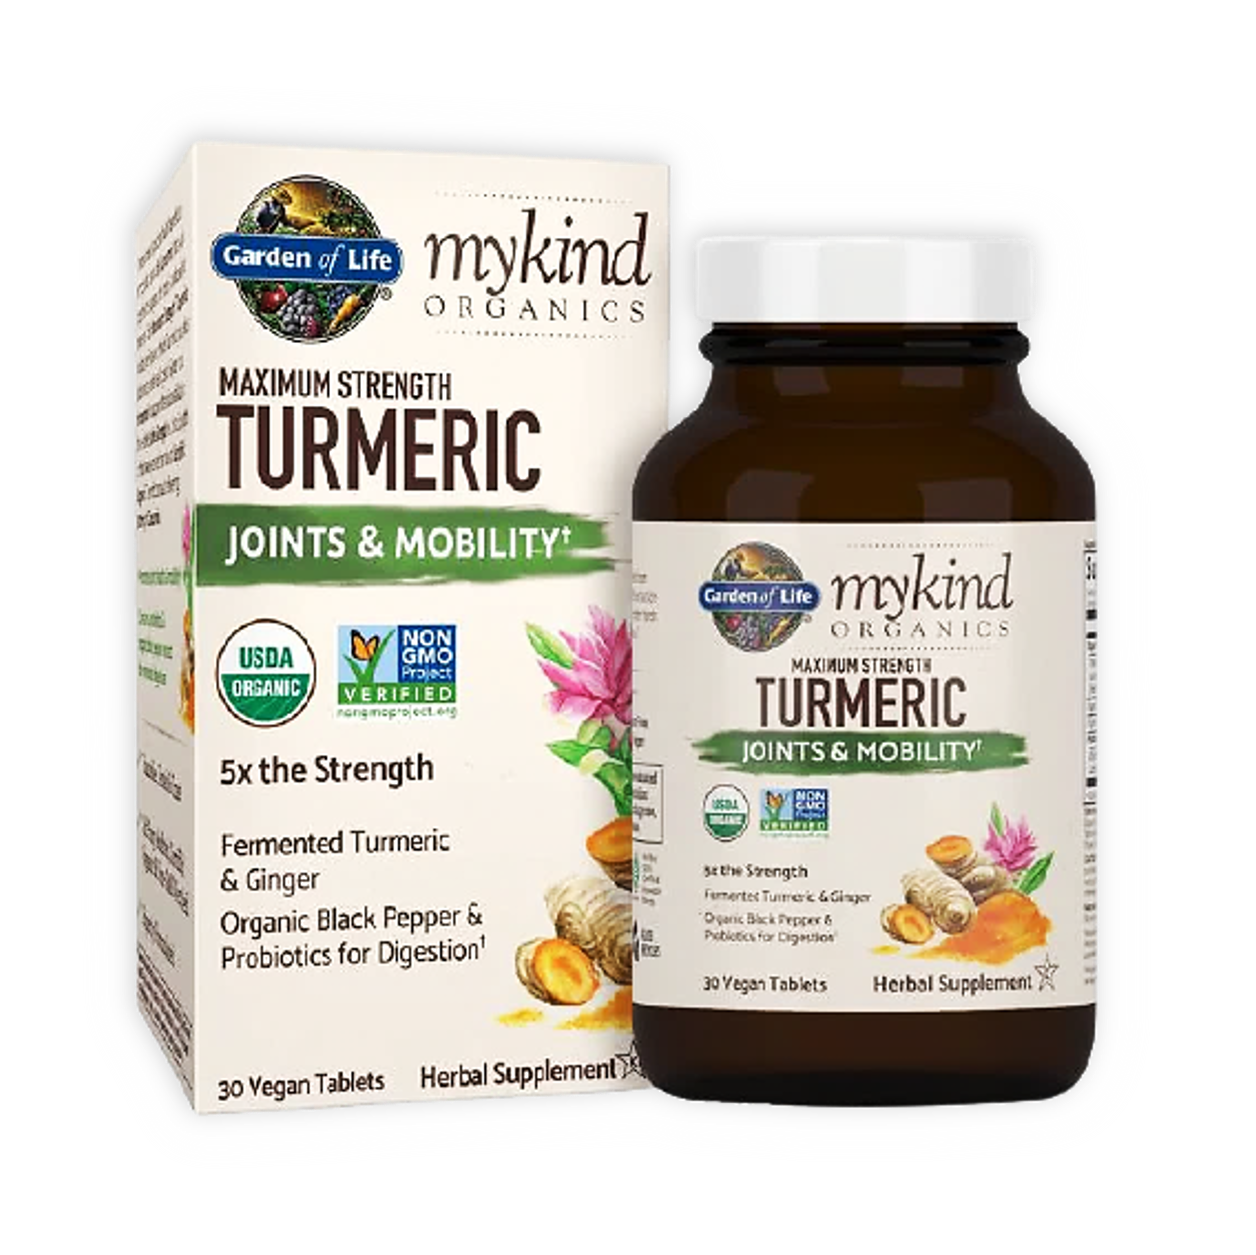 mykind Organics Maximum Strength Turmeric by Garden of Life